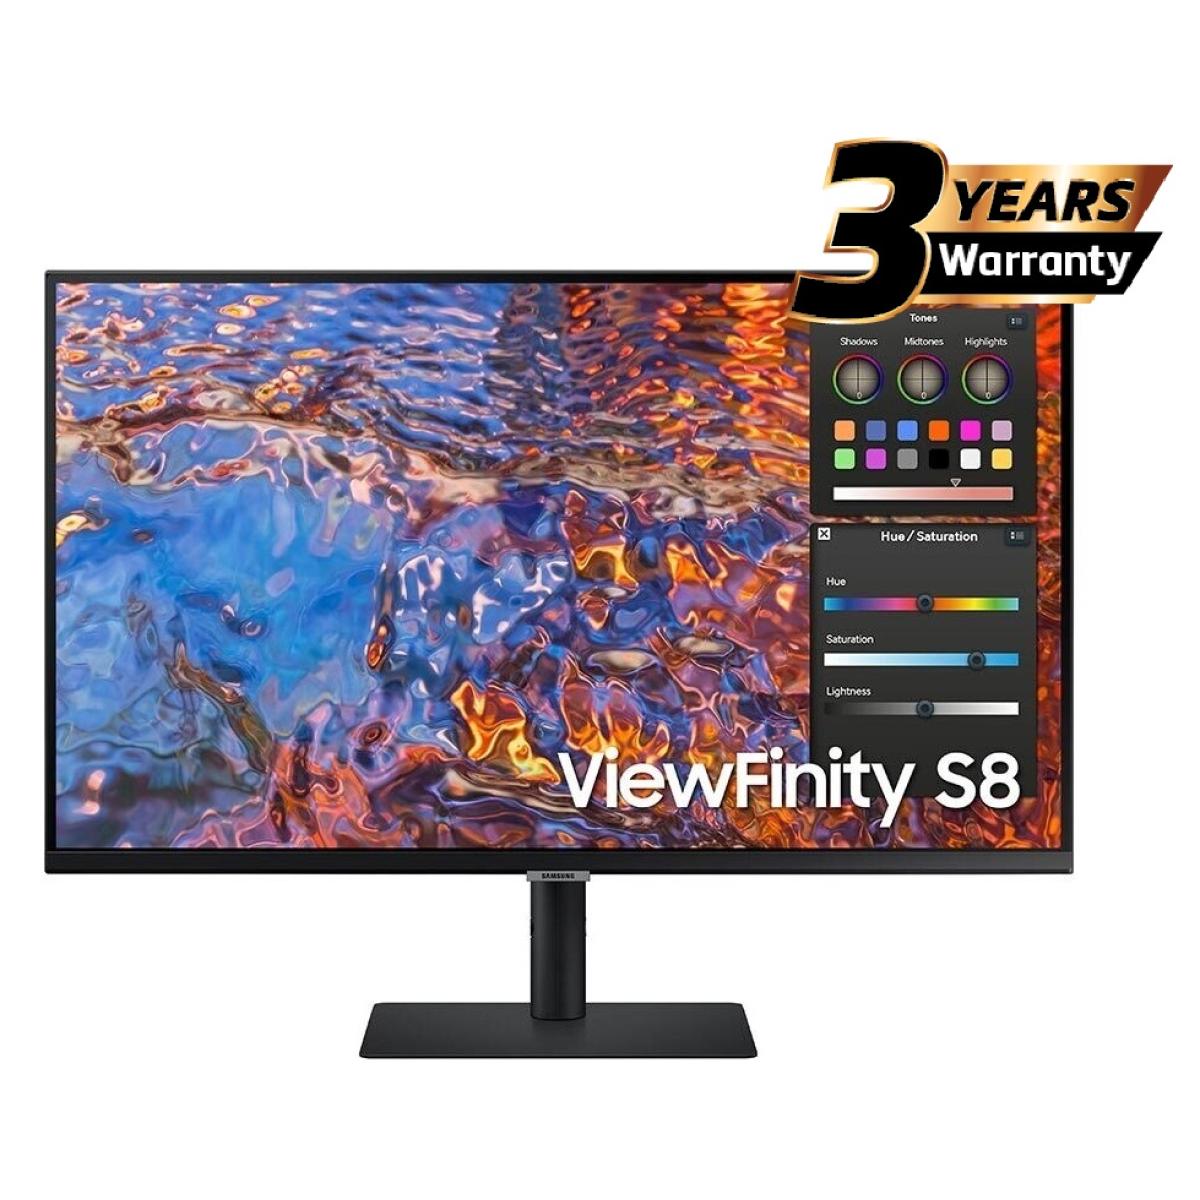 Samsung 27" ViewFinity S8 UHD Monitor